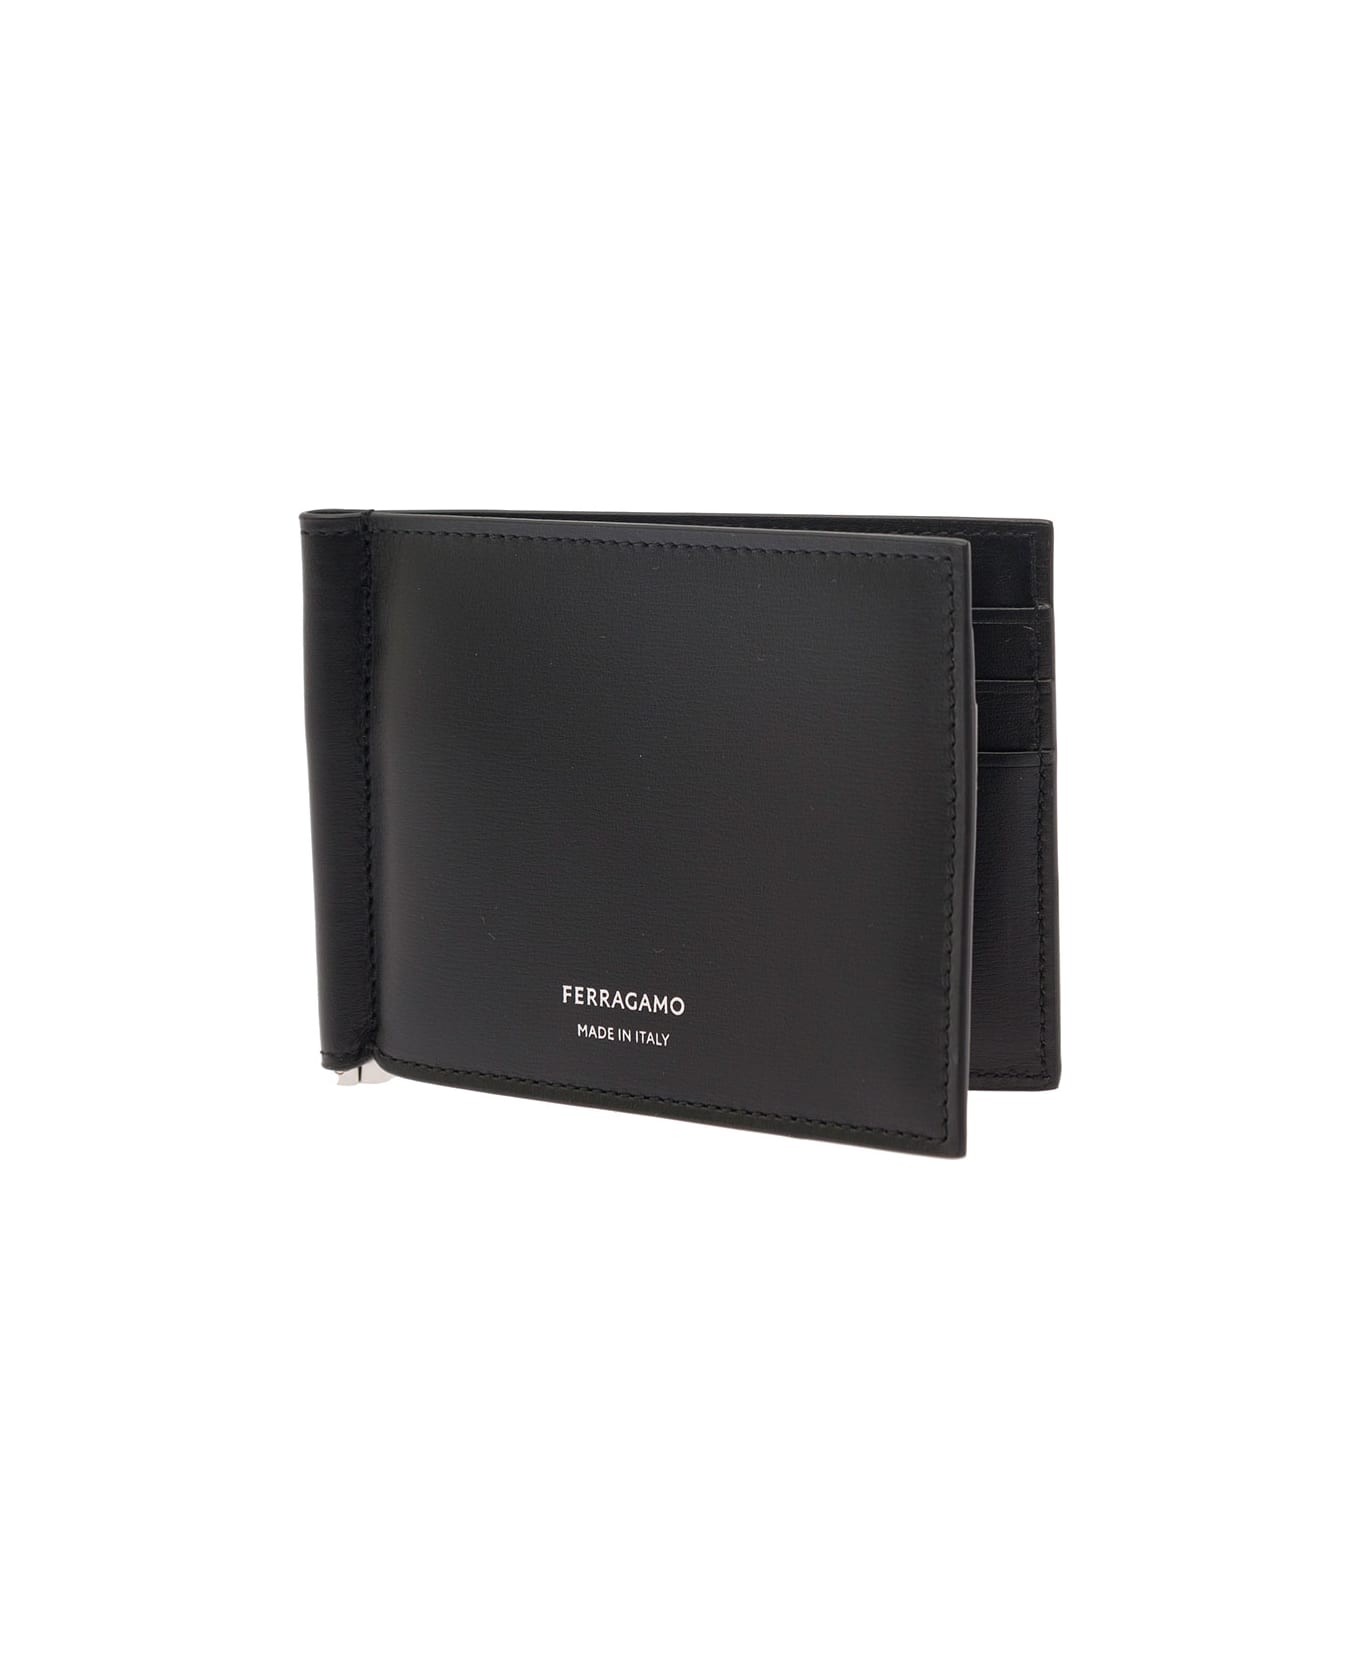 Ferragamo Black Bifold Wallet With Logo Lettering In Leather Woman - Black